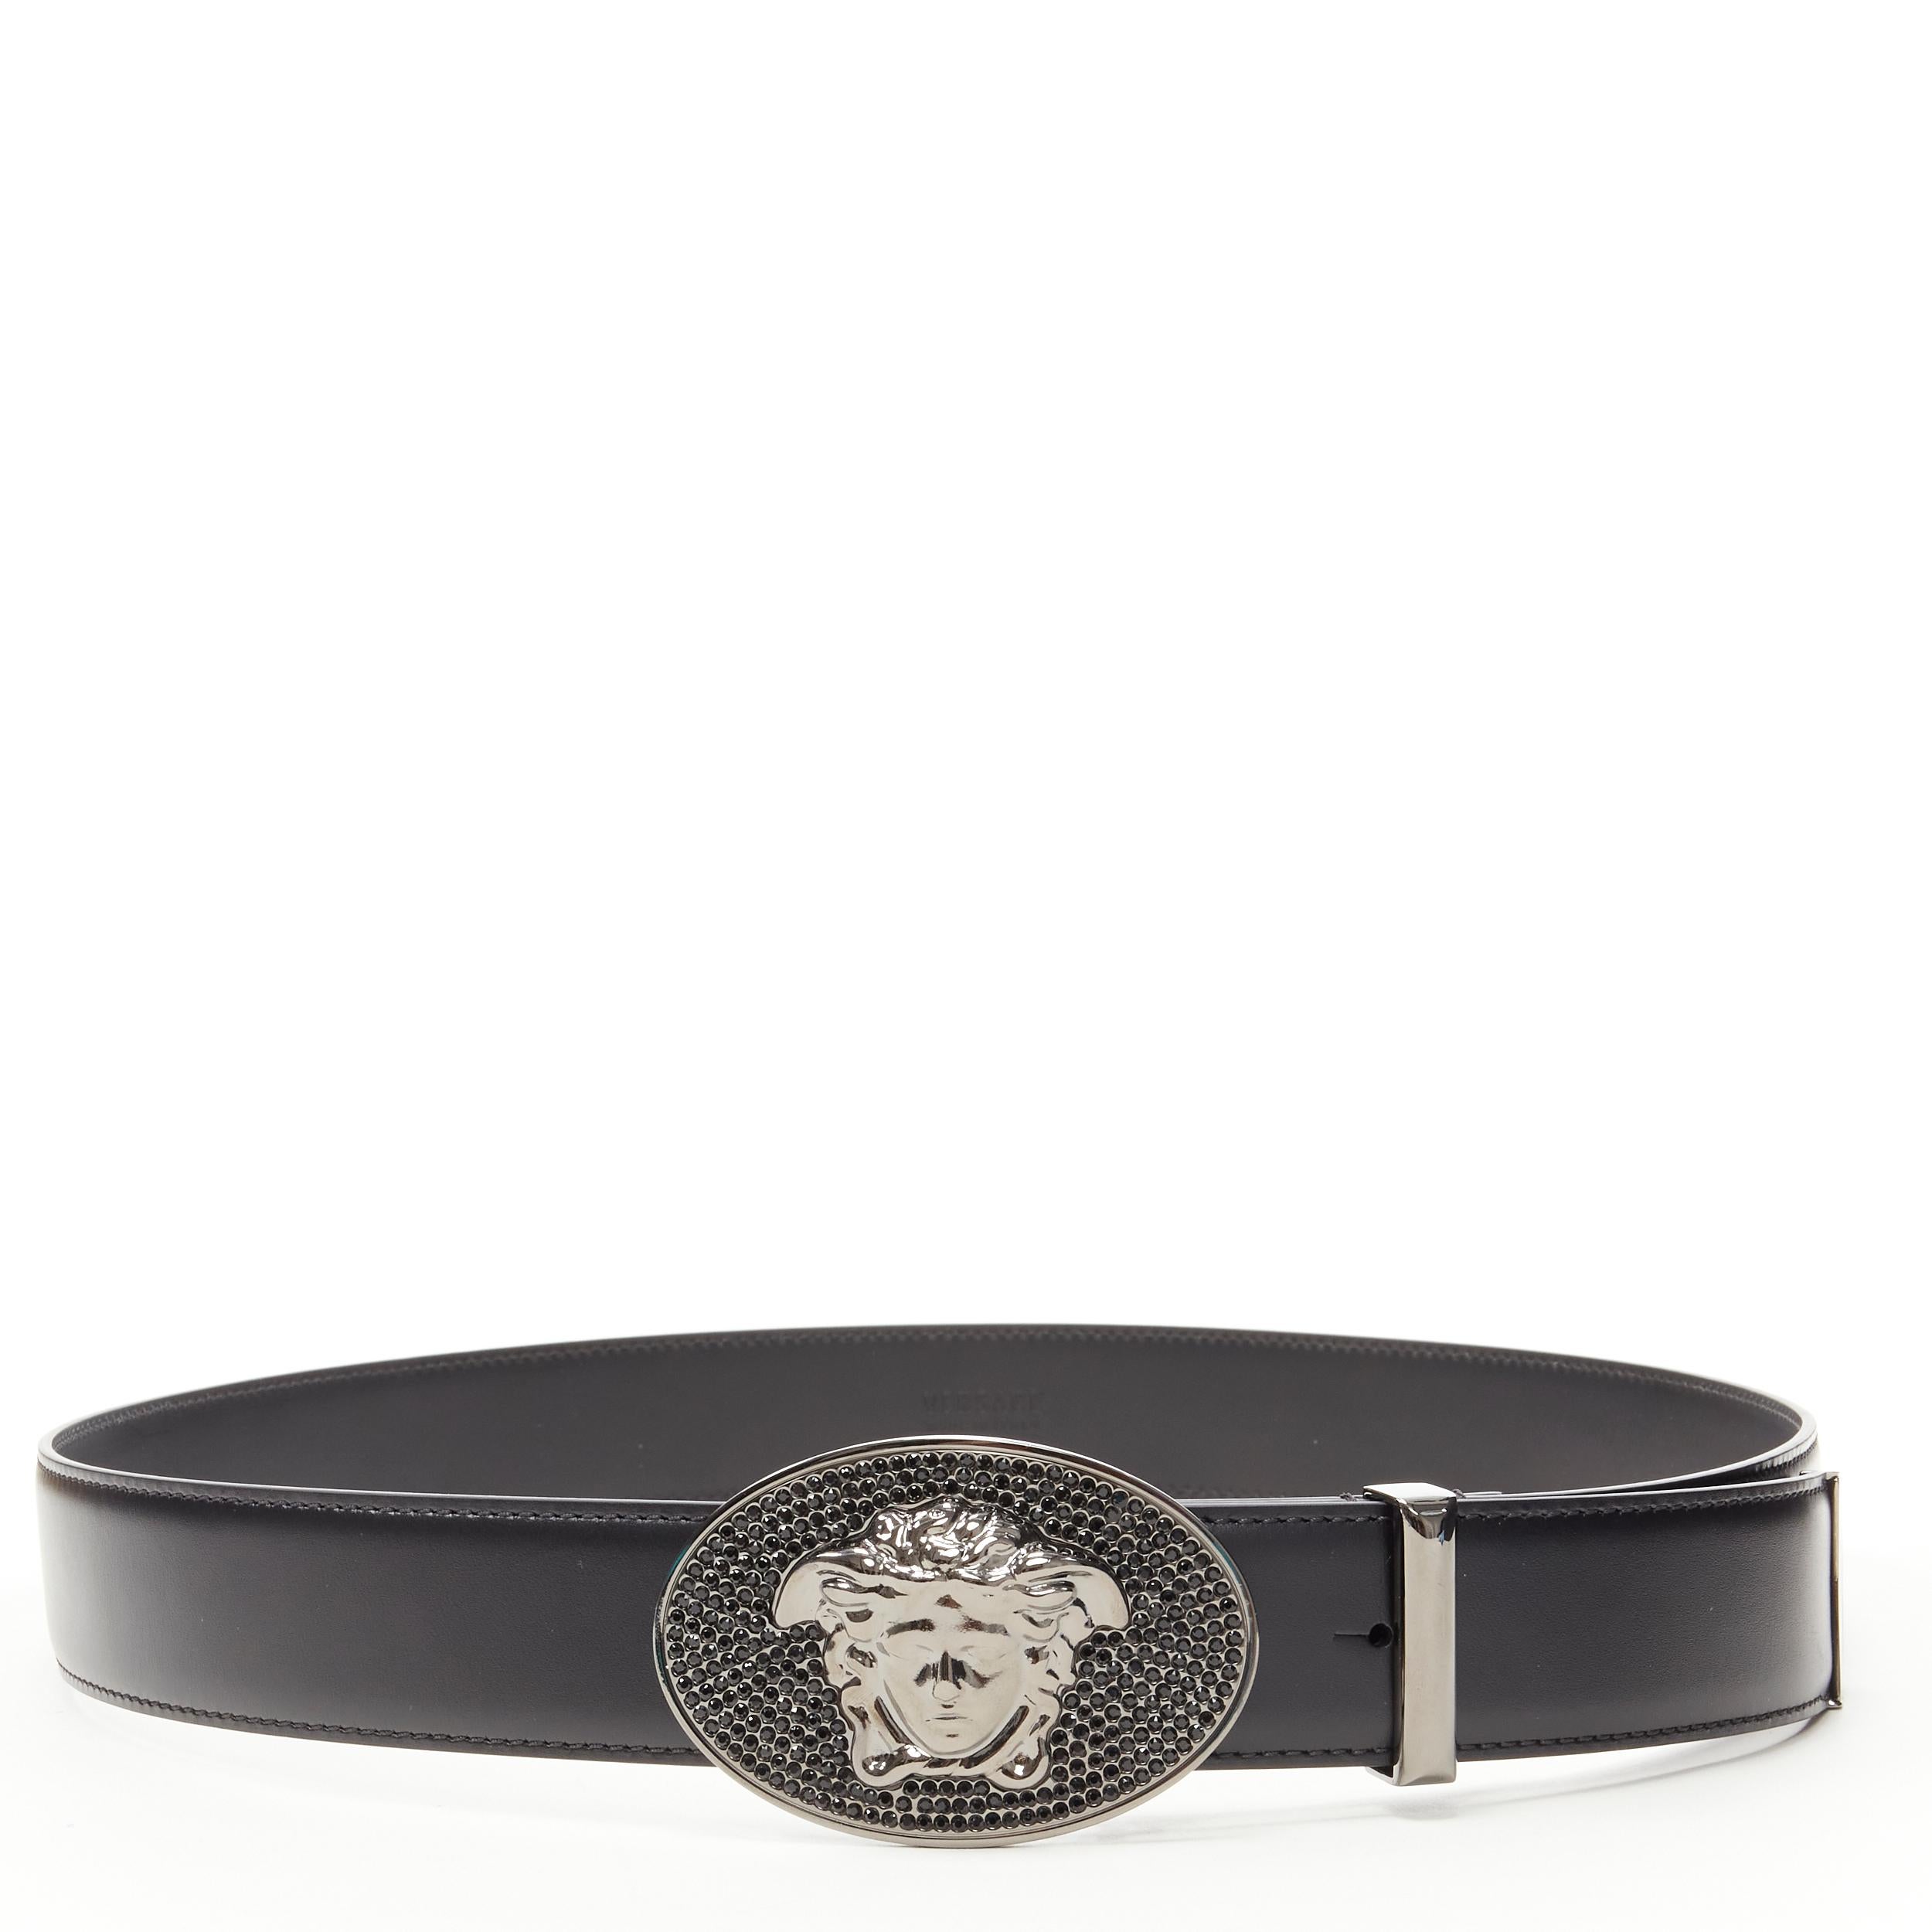 new VERSACE La Medusa crystal silver buckle black leather belt 105cm 40-44